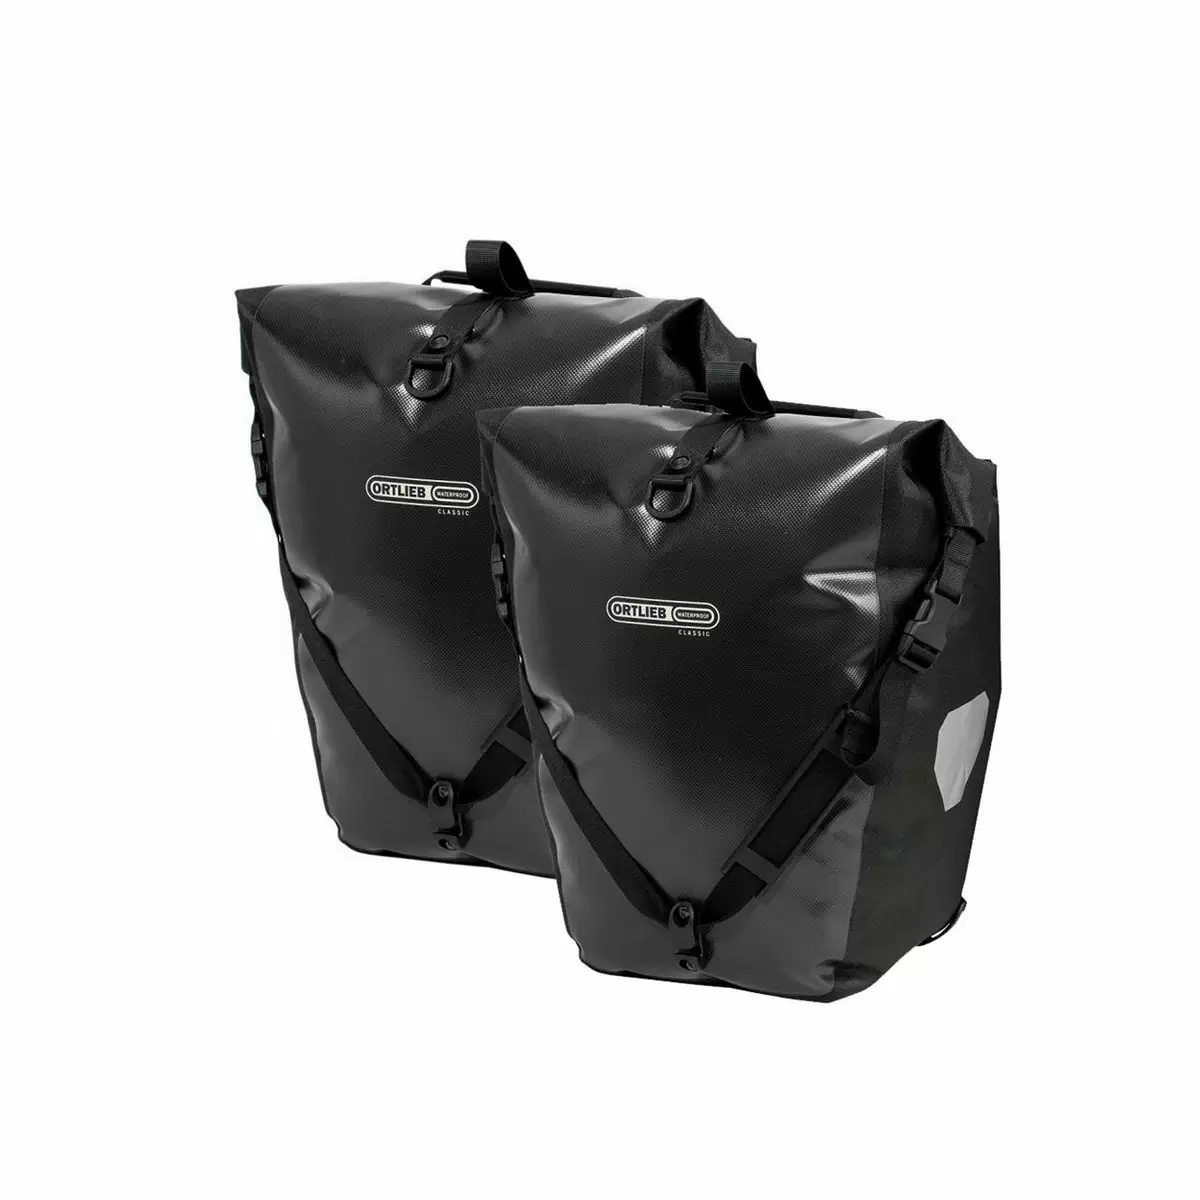 pannier bag set back-roller classic f5301 ql2.1 black 40l - image